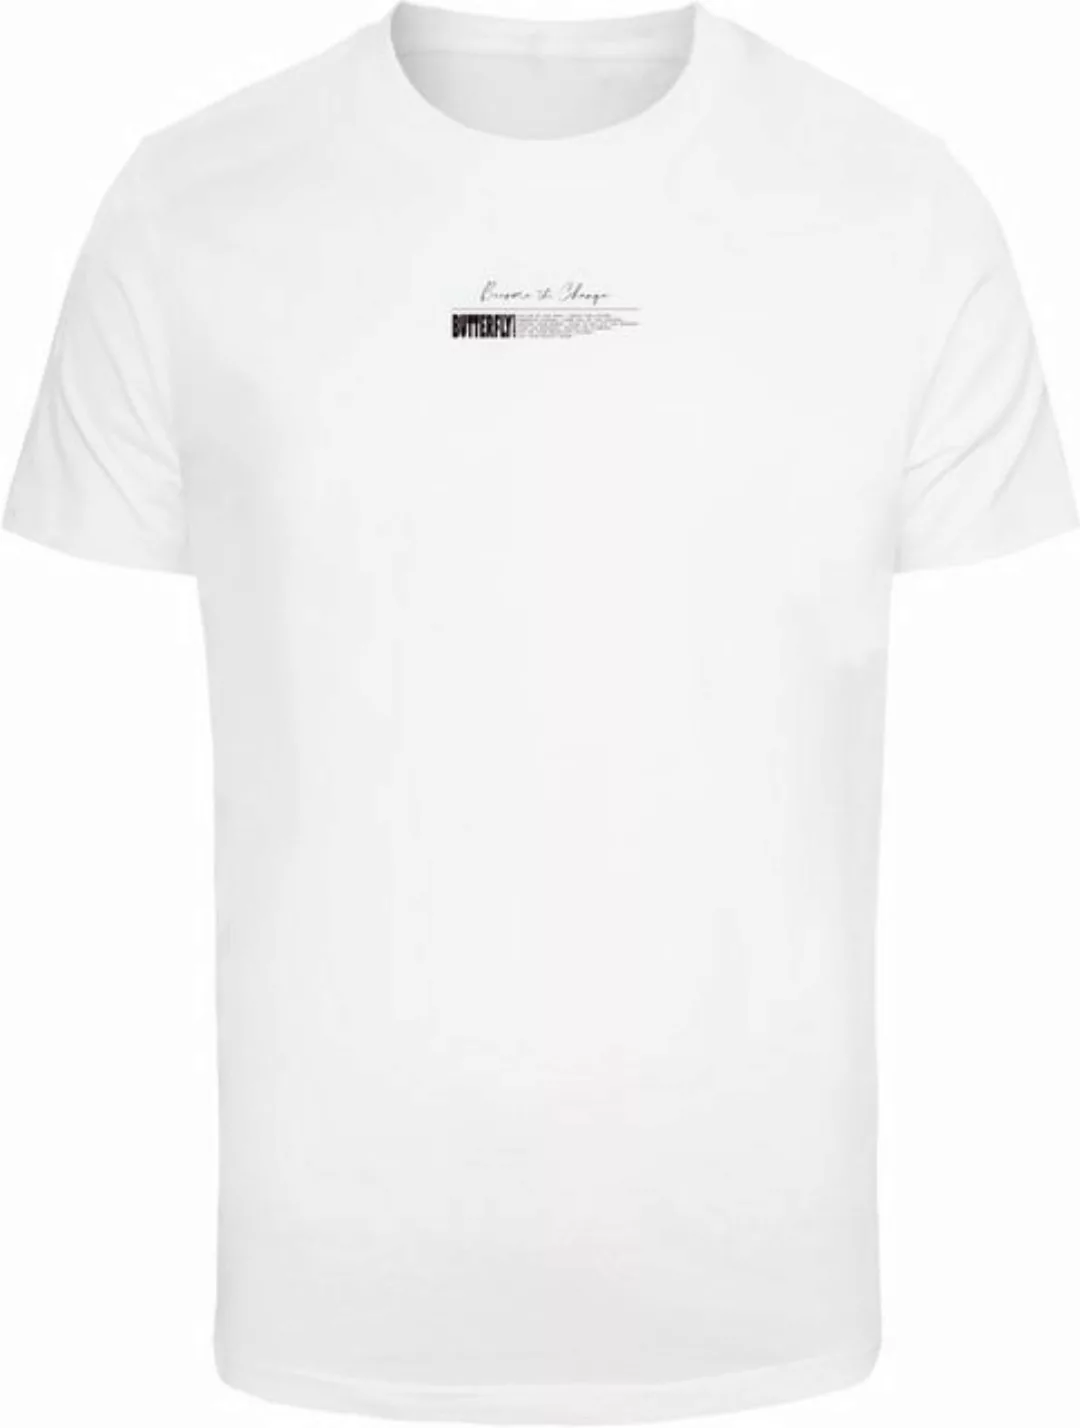 Mister Tee T-Shirt Become the Change Butterfly 2.0 Tee günstig online kaufen